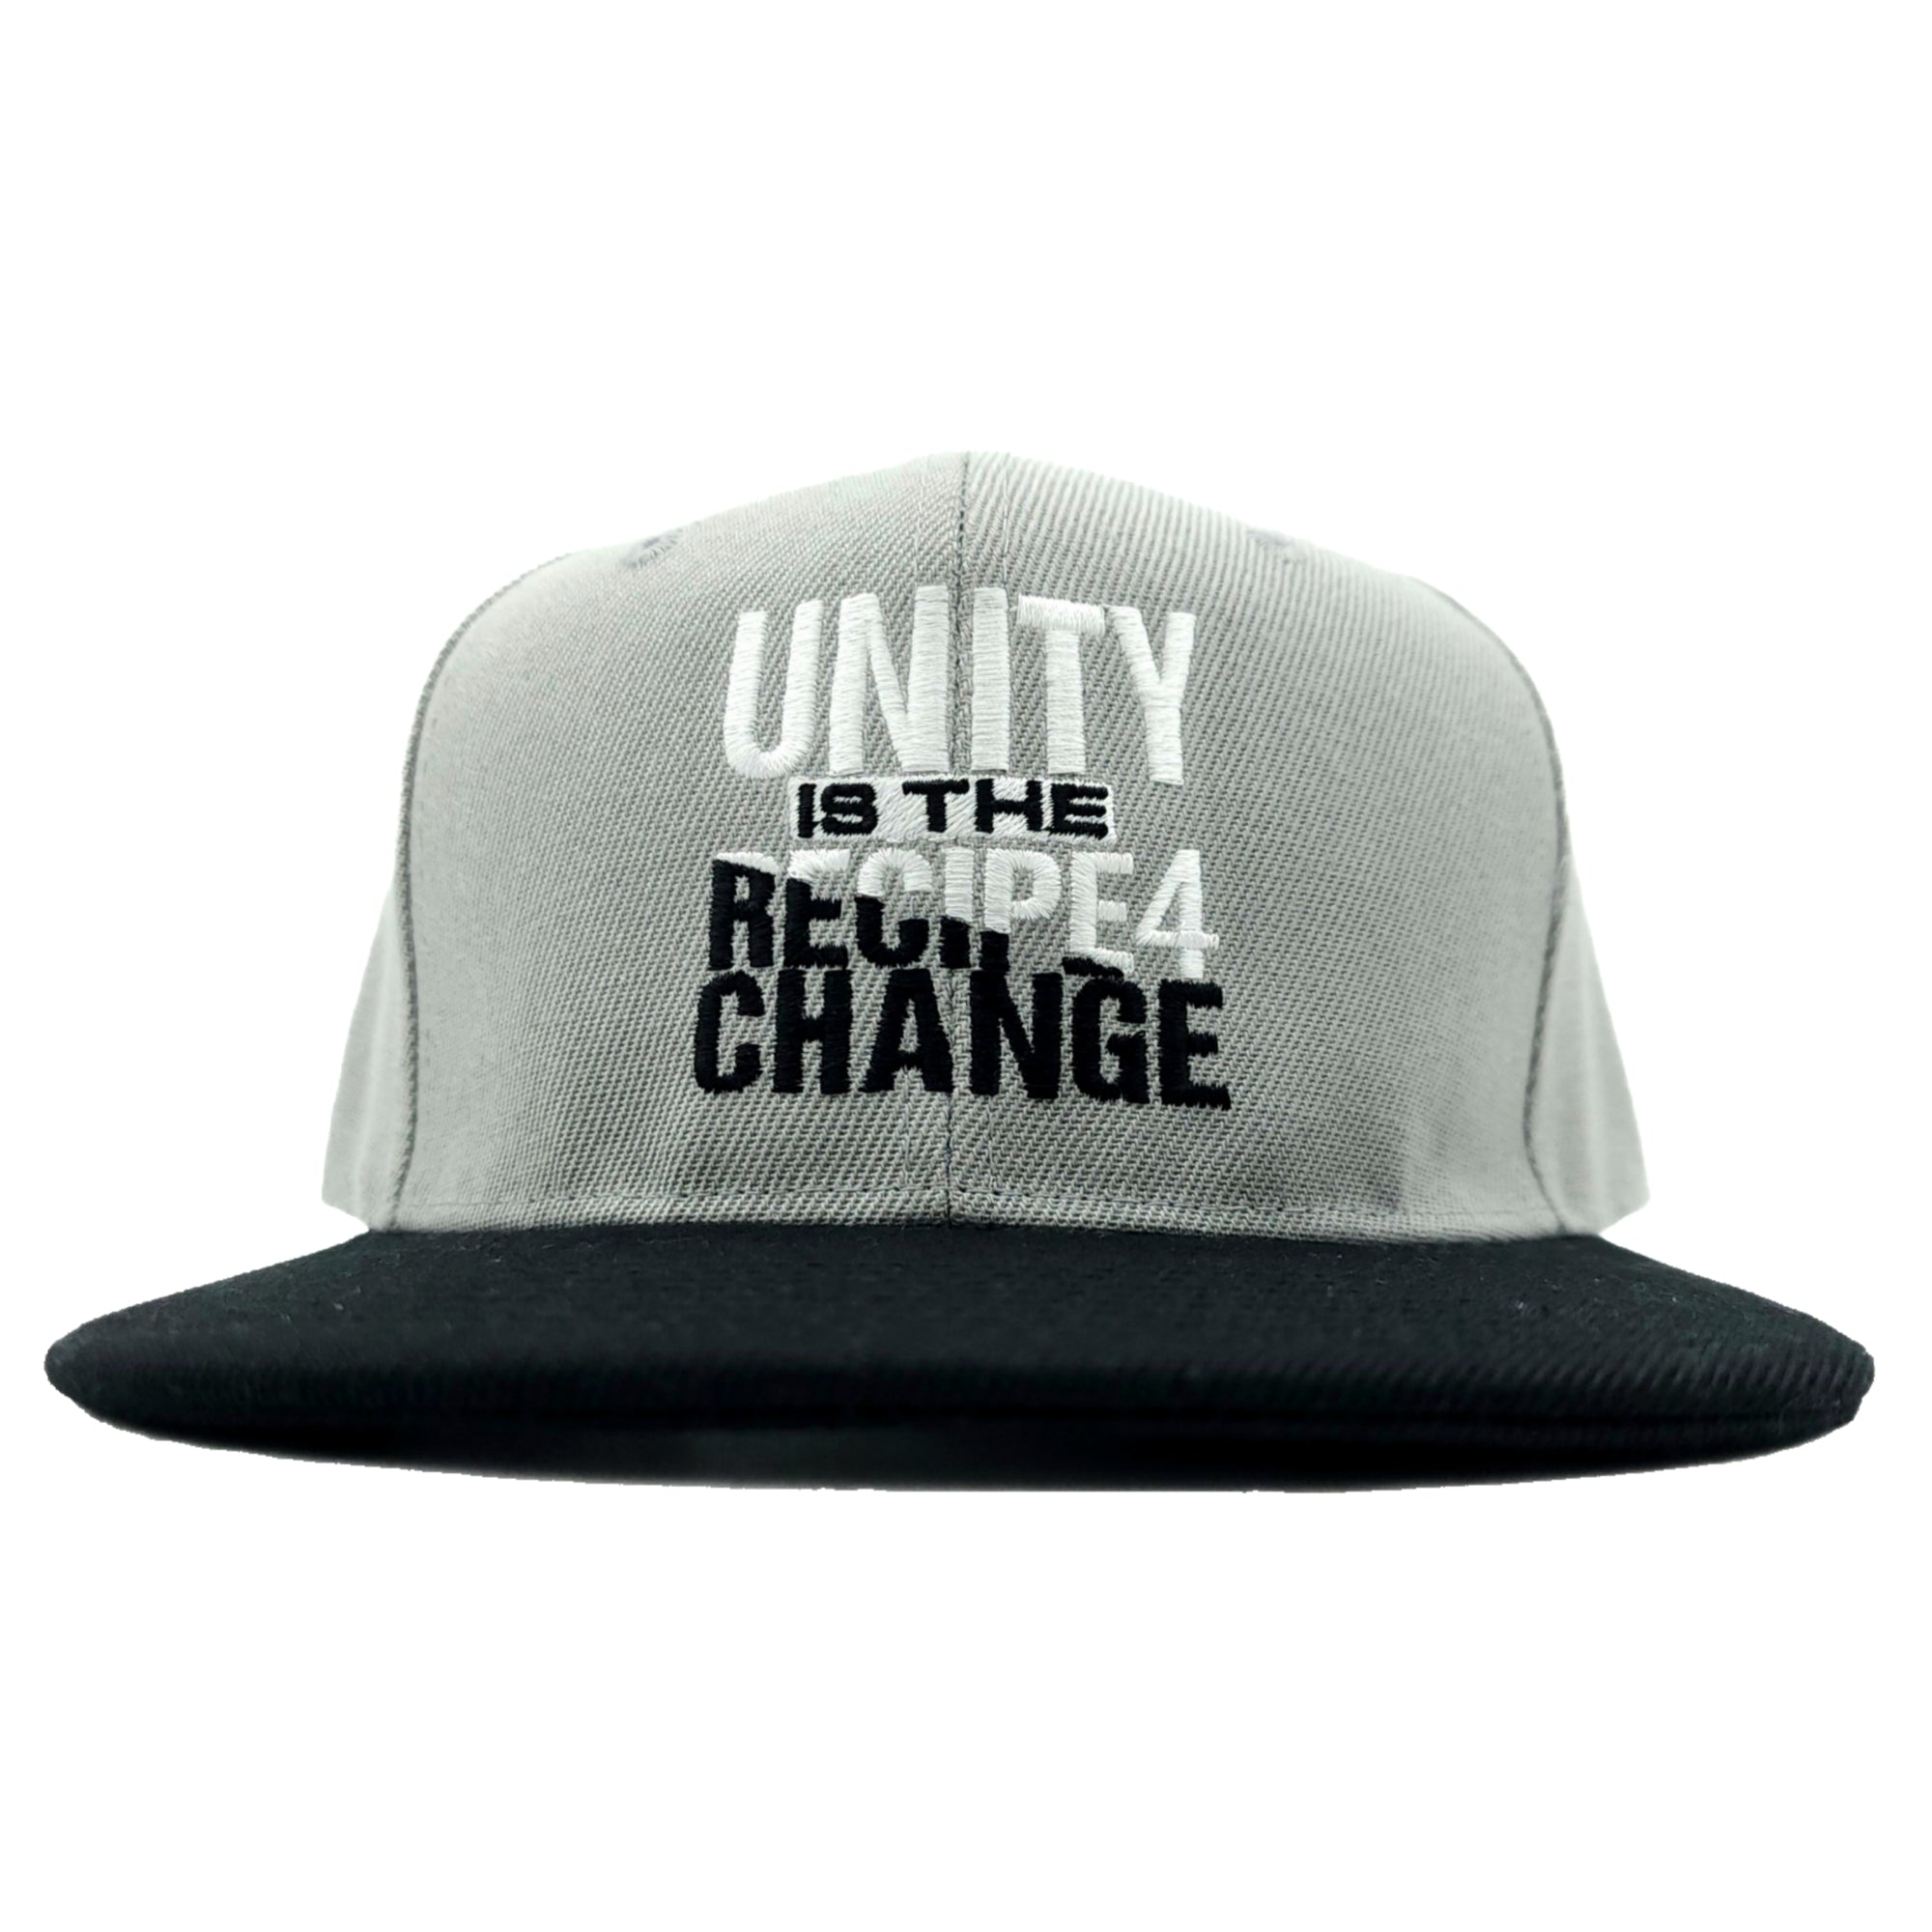 Printed Unity Hats | Embroidered Unity Hats | Chef II Impress